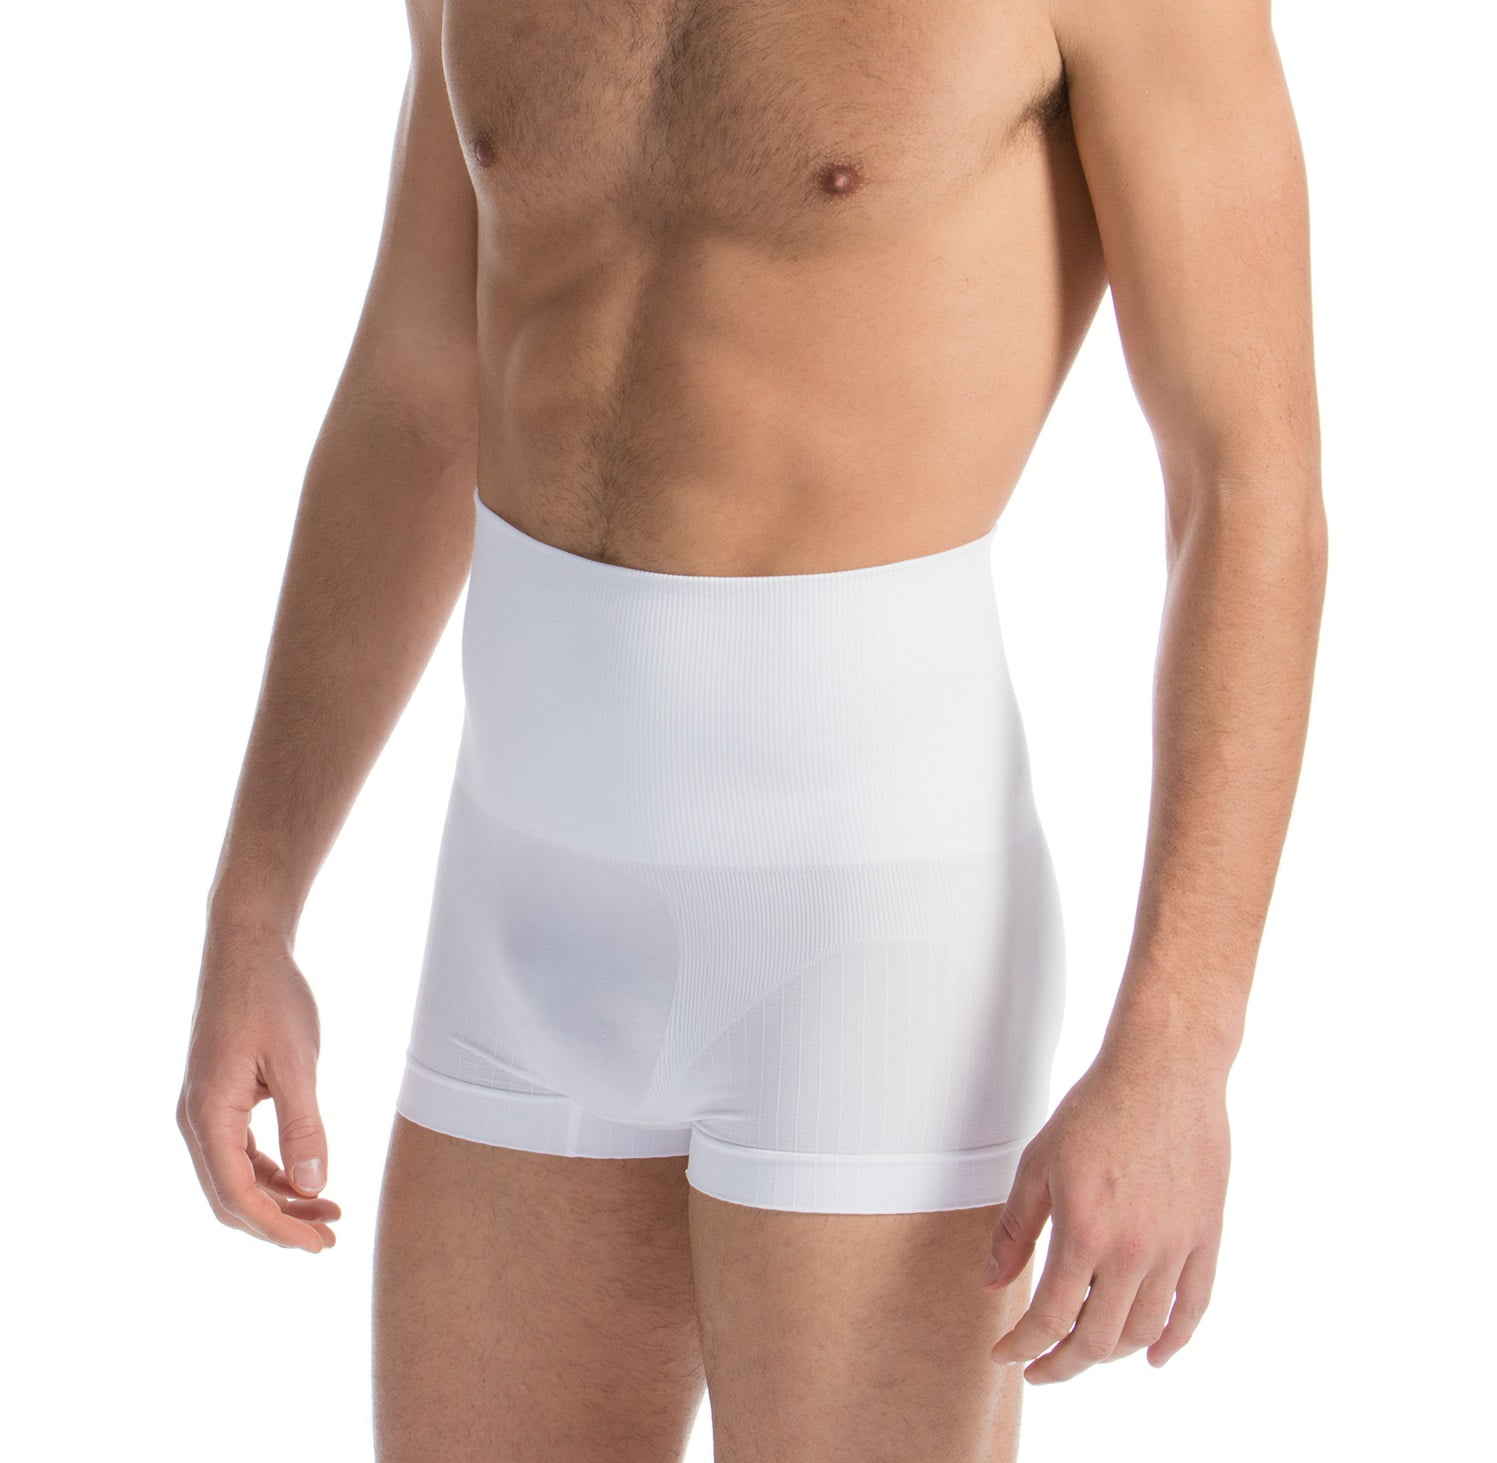 Rago 1365 Open bottom Girdle White with garters with stockings